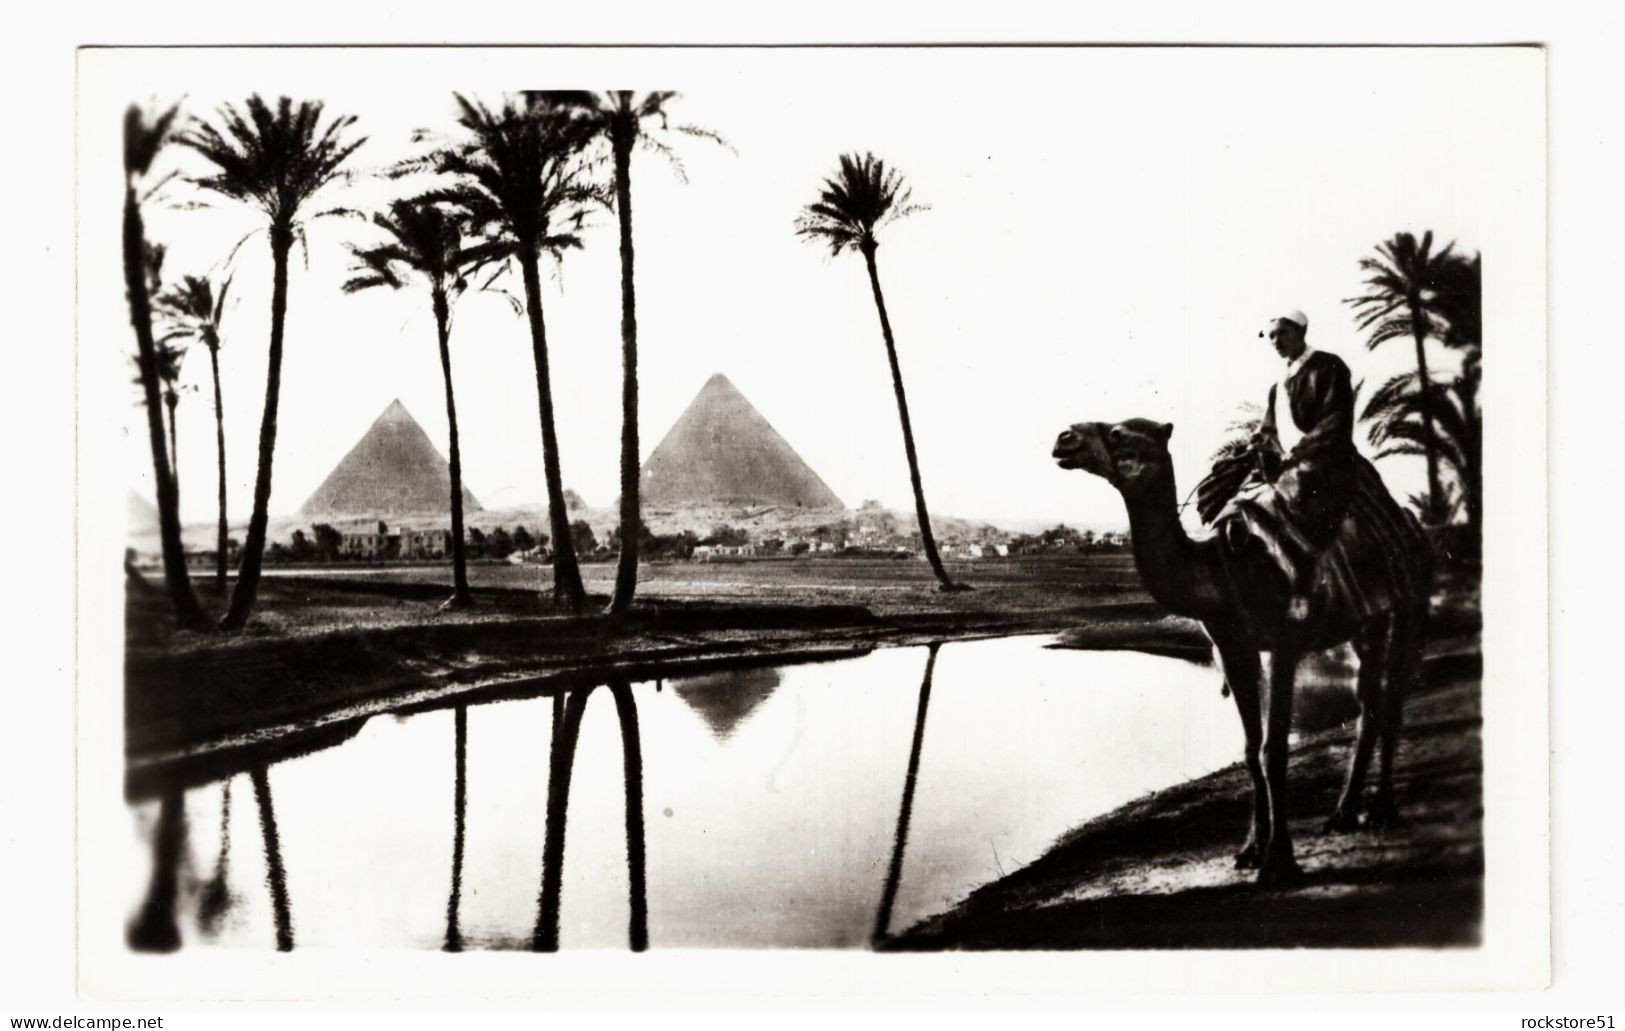 Giza Cairo The Pyramides 3 Postcards - Gizeh